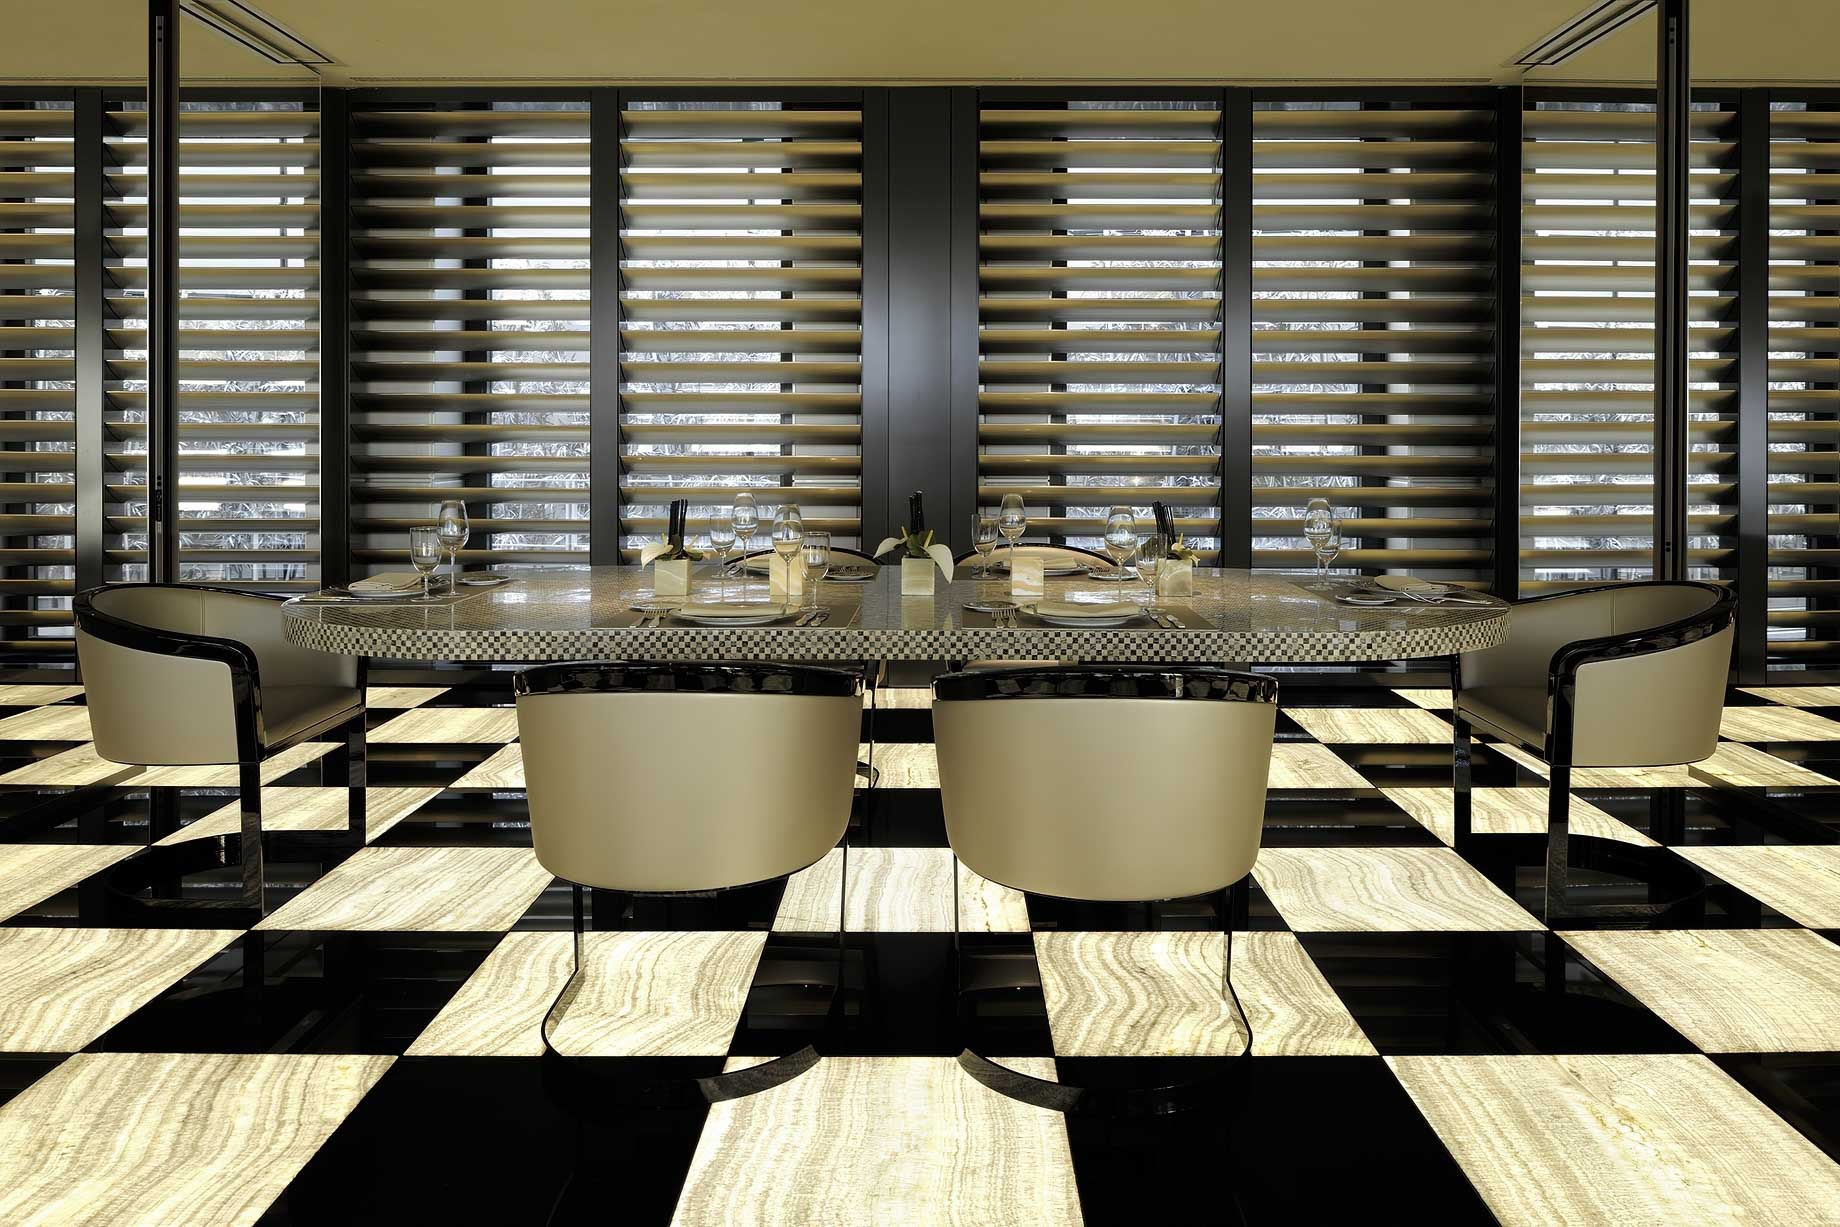 107 – Armani Hotel Milano – Milan, Italy – Armani Restaurant Table